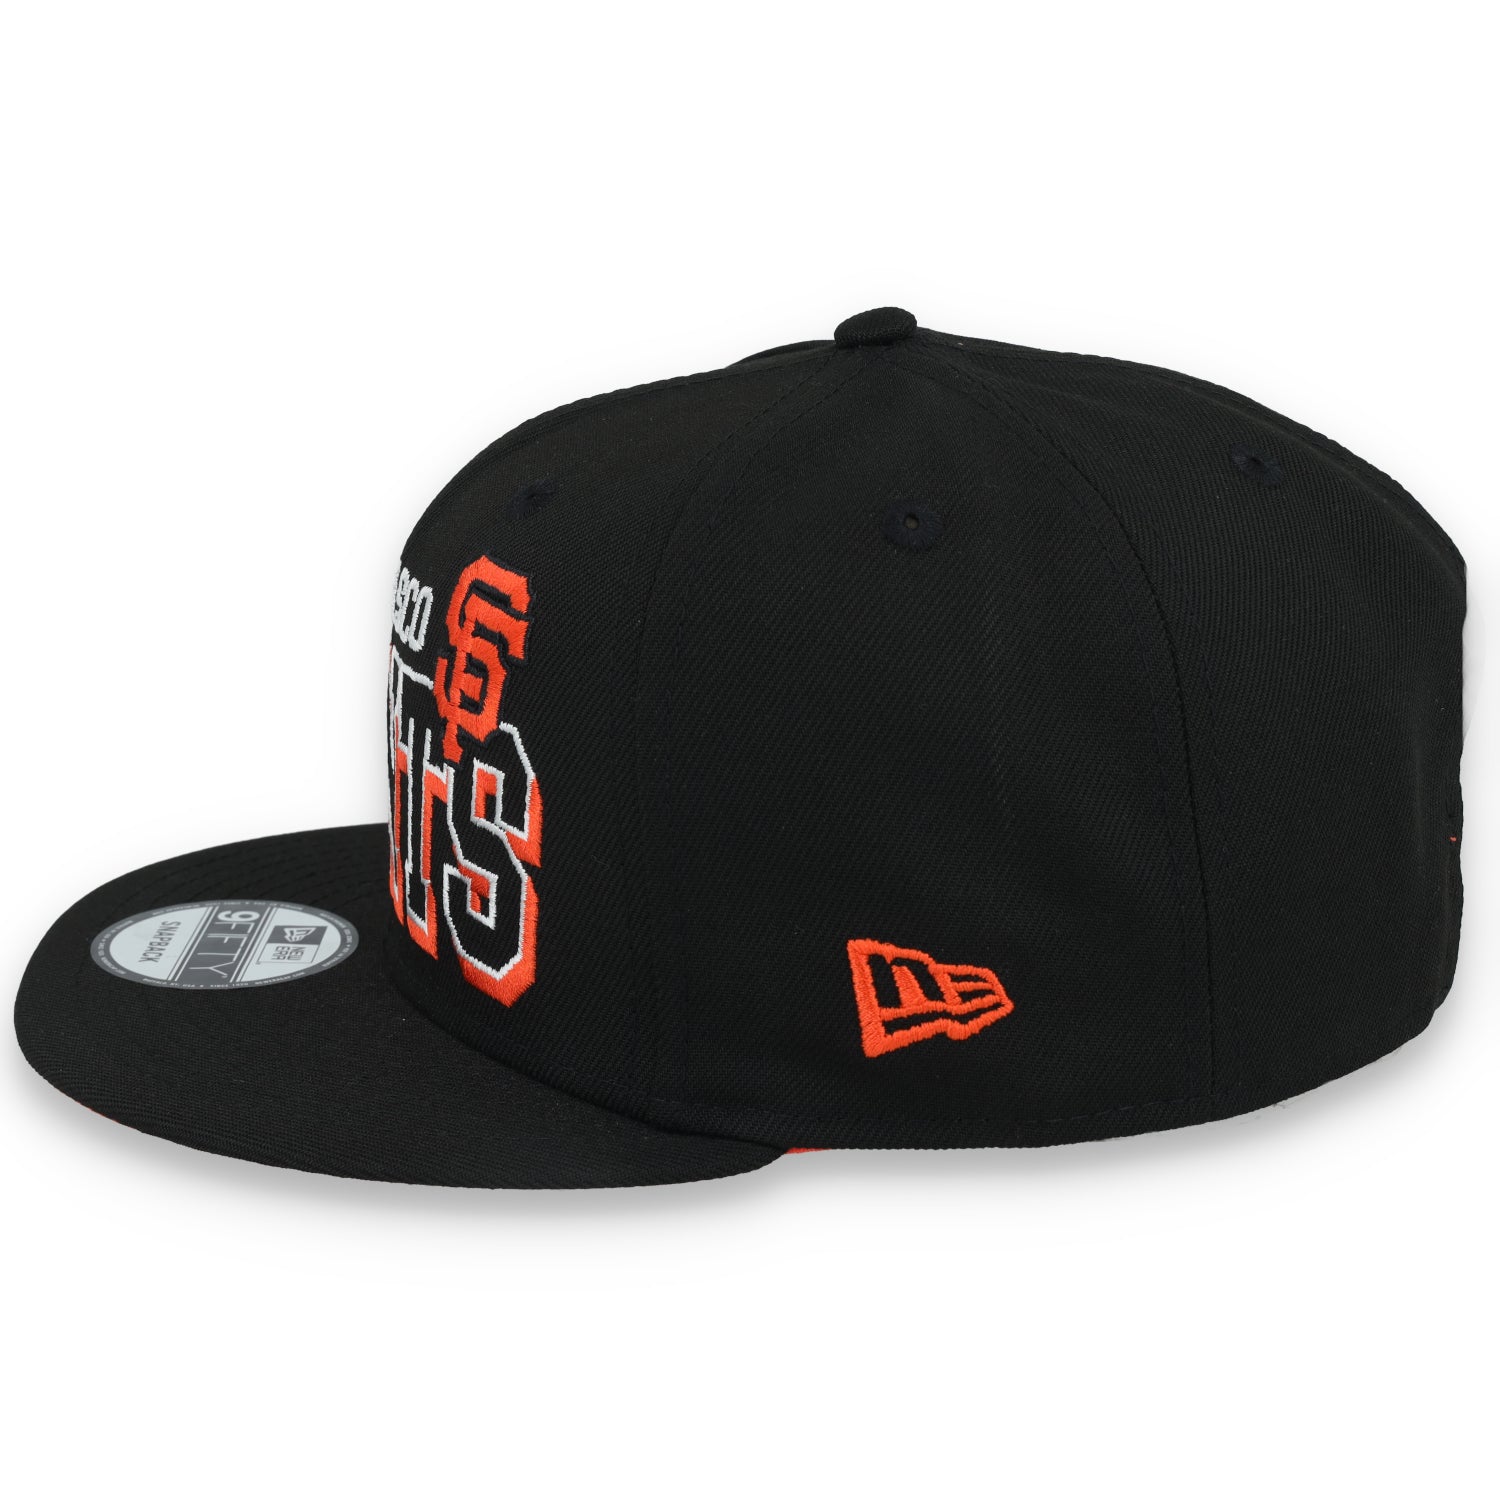 New Era San Francisco Giants Game Day 9FIFTY Snapback Hat